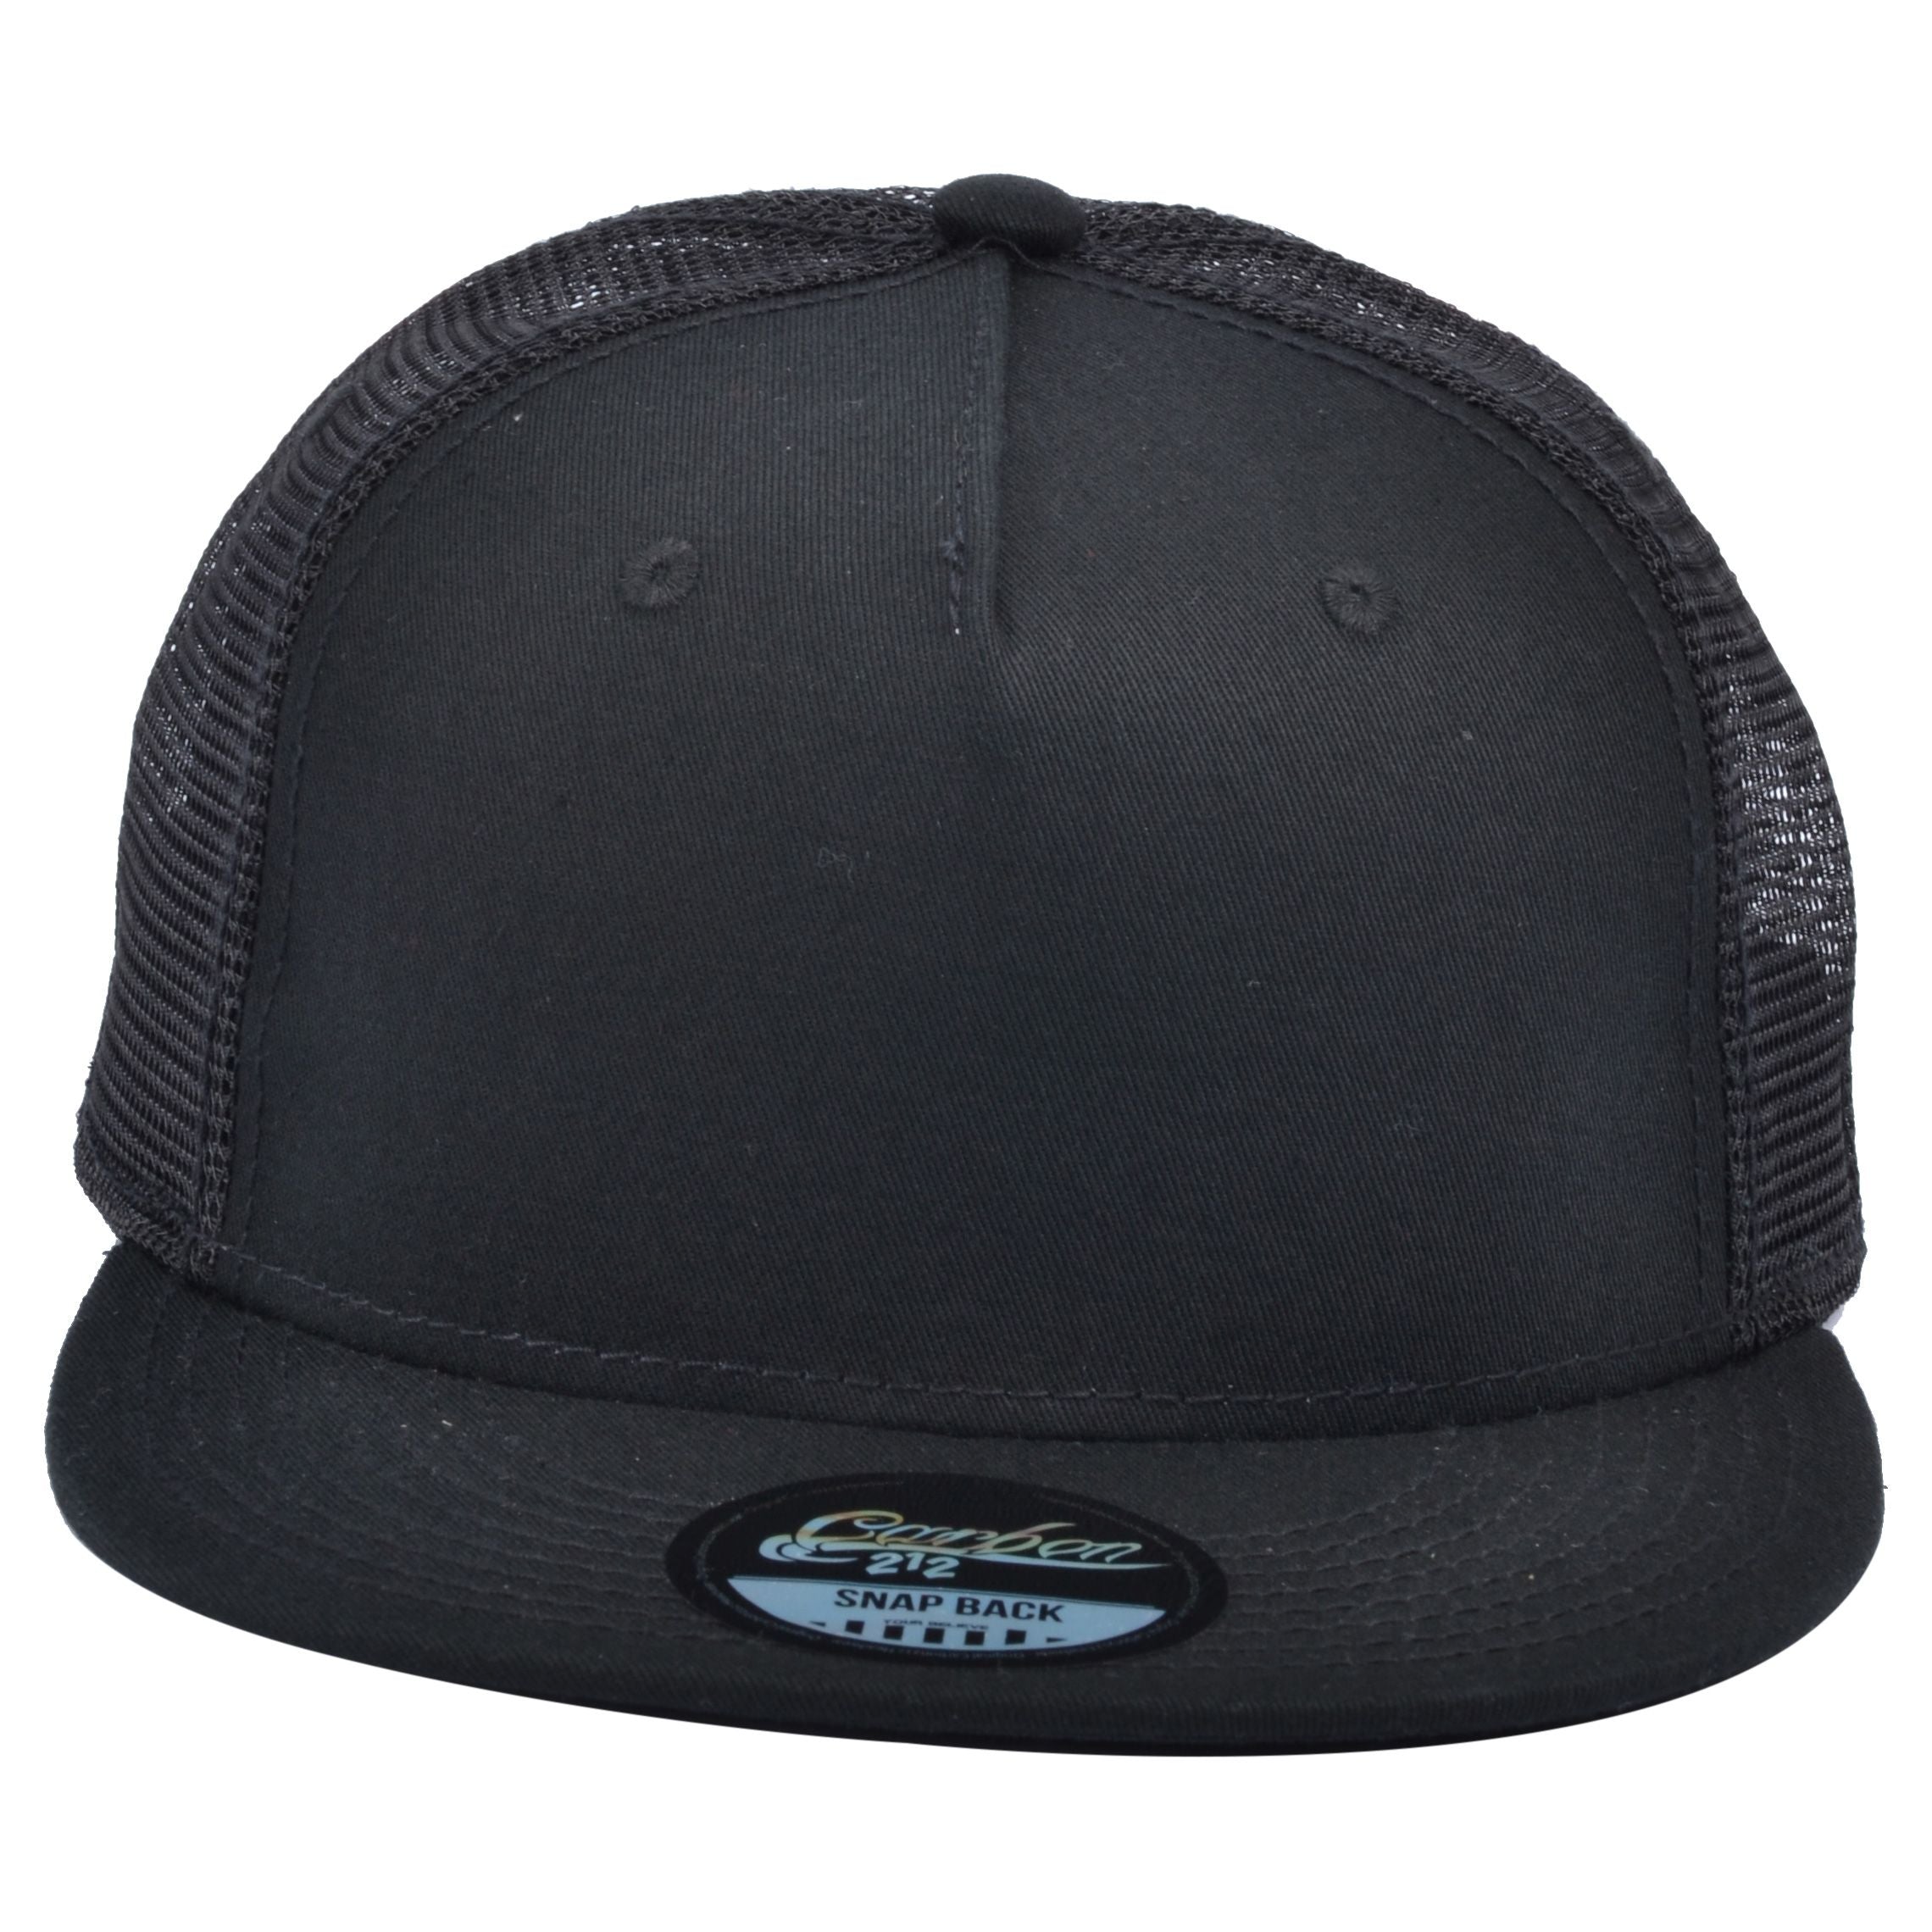 Carbon212 5 Panel Mesh Back Trucker Snapback Hat